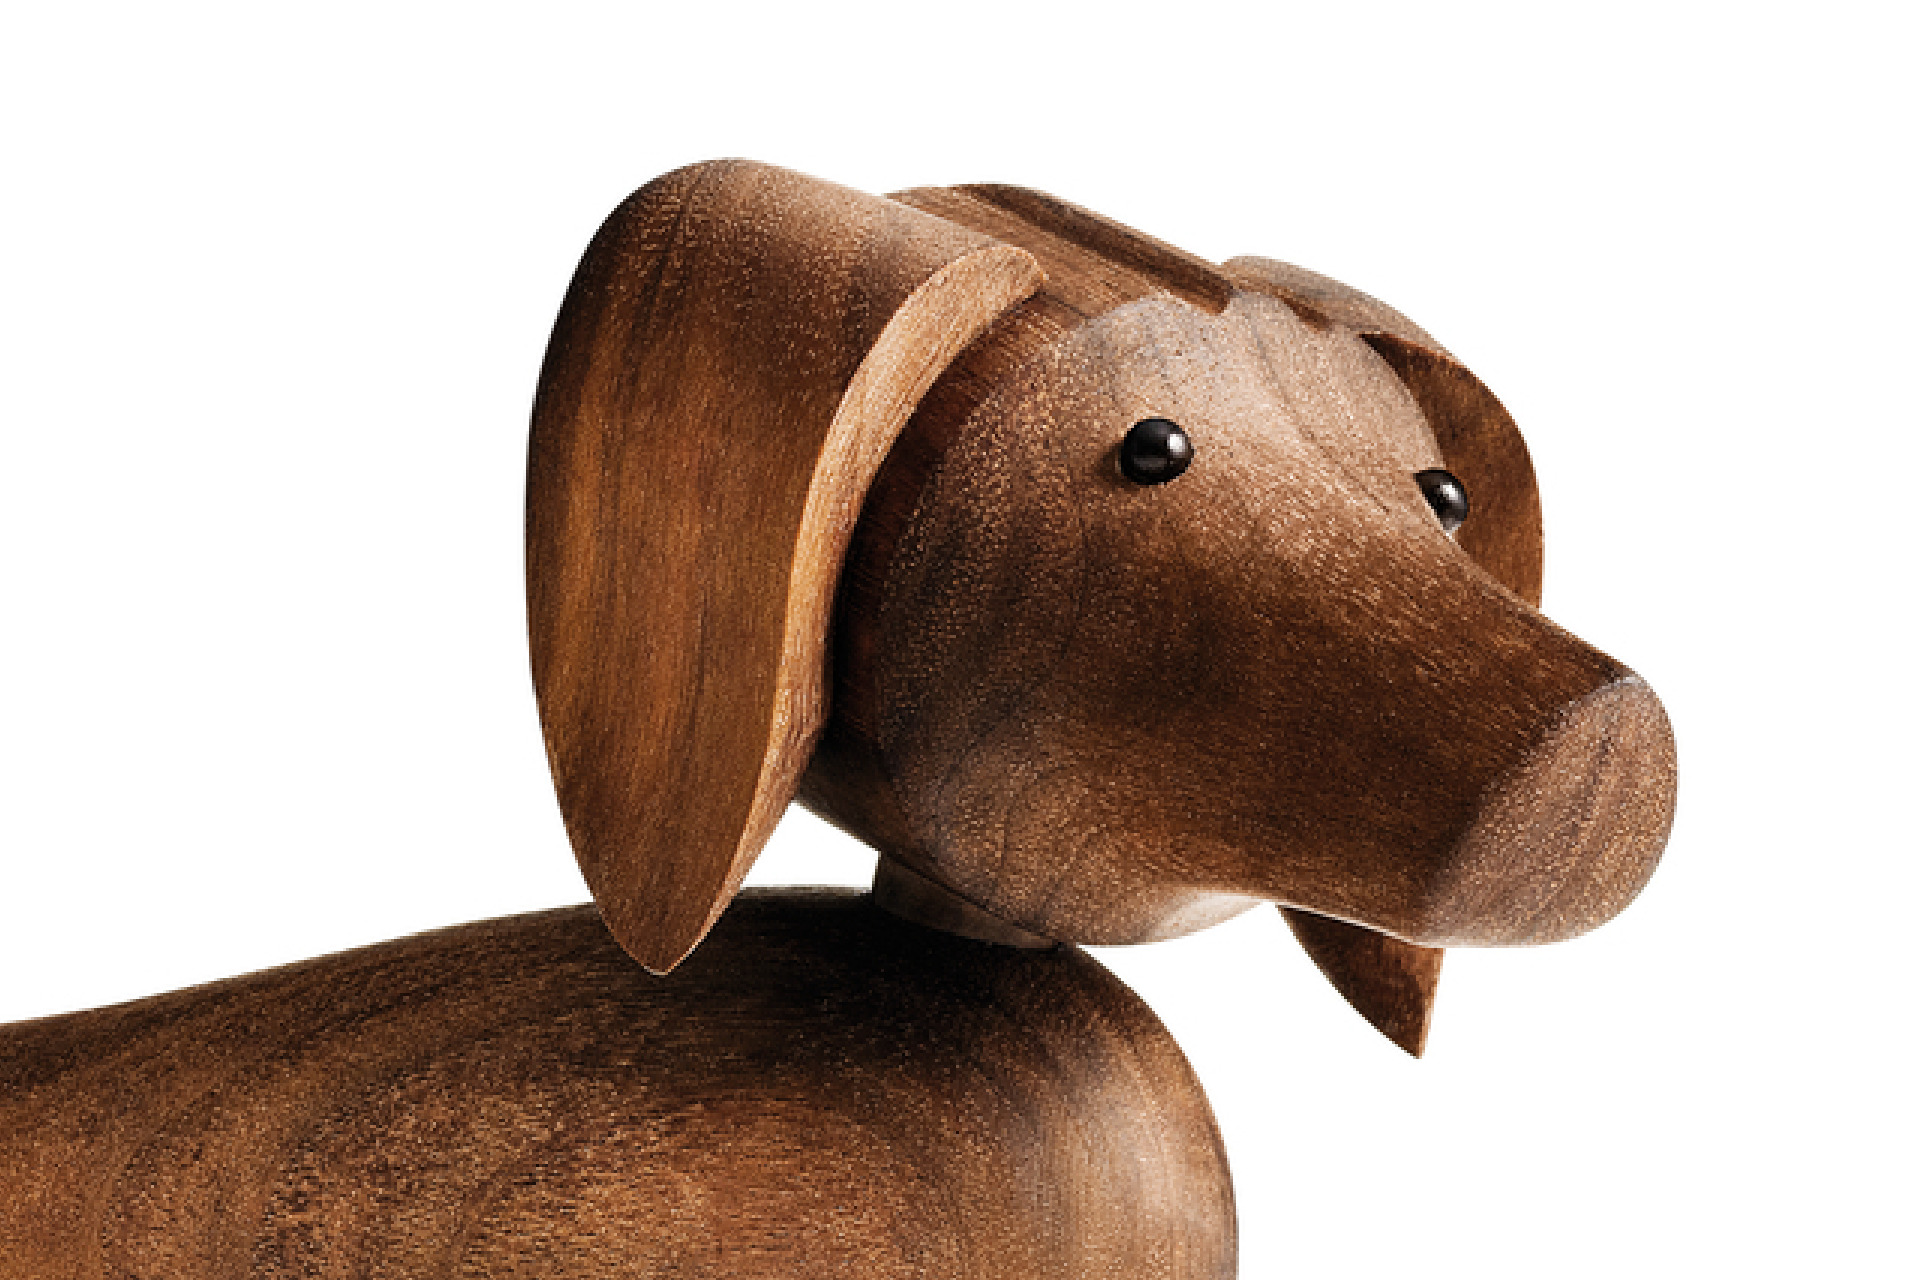 The dachshund named Pind by Kay Bojesen